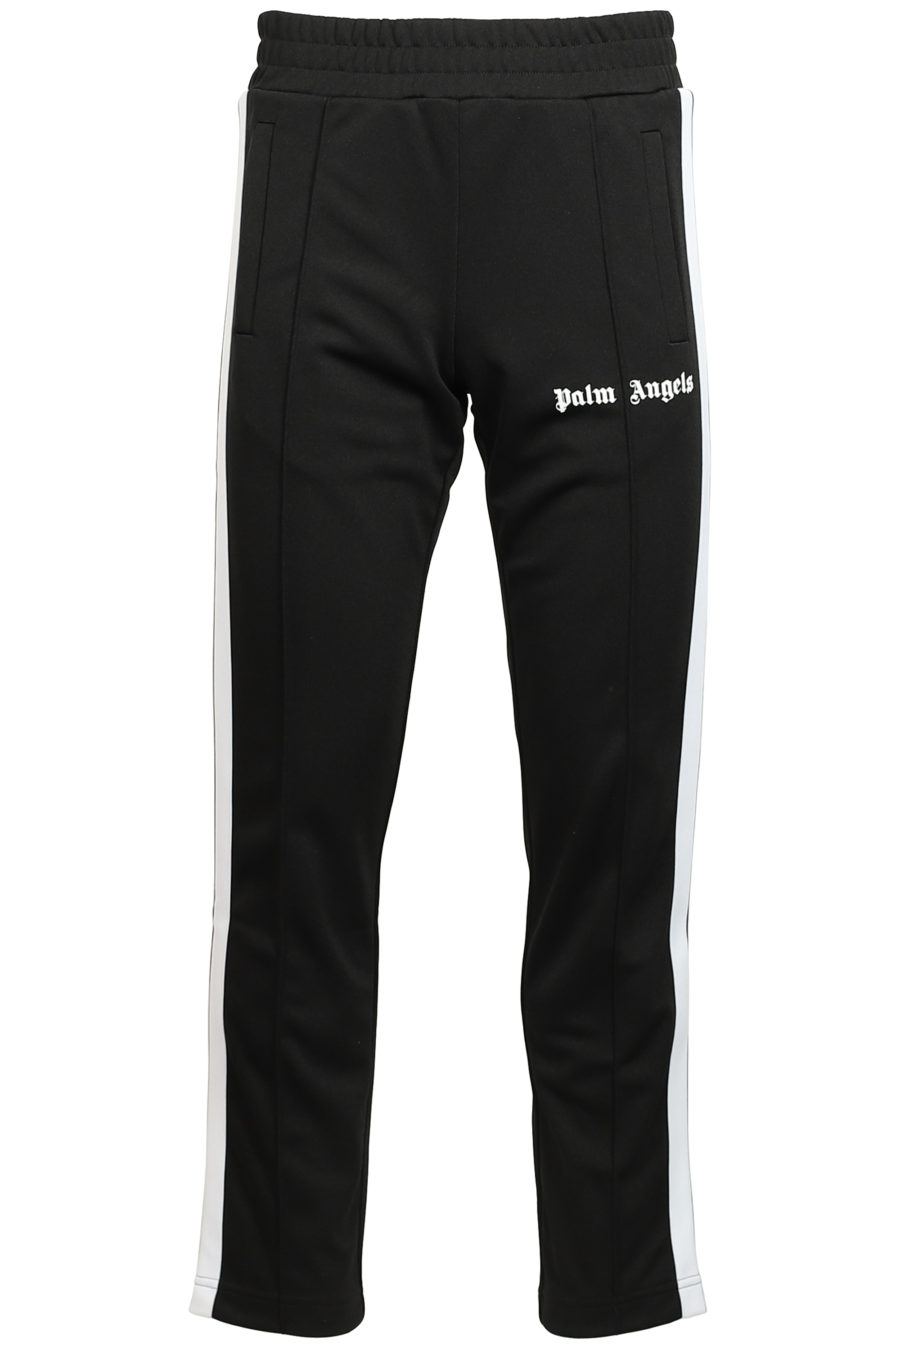 Pantalón negro con logotipo y rayas laterales - IMG 3748